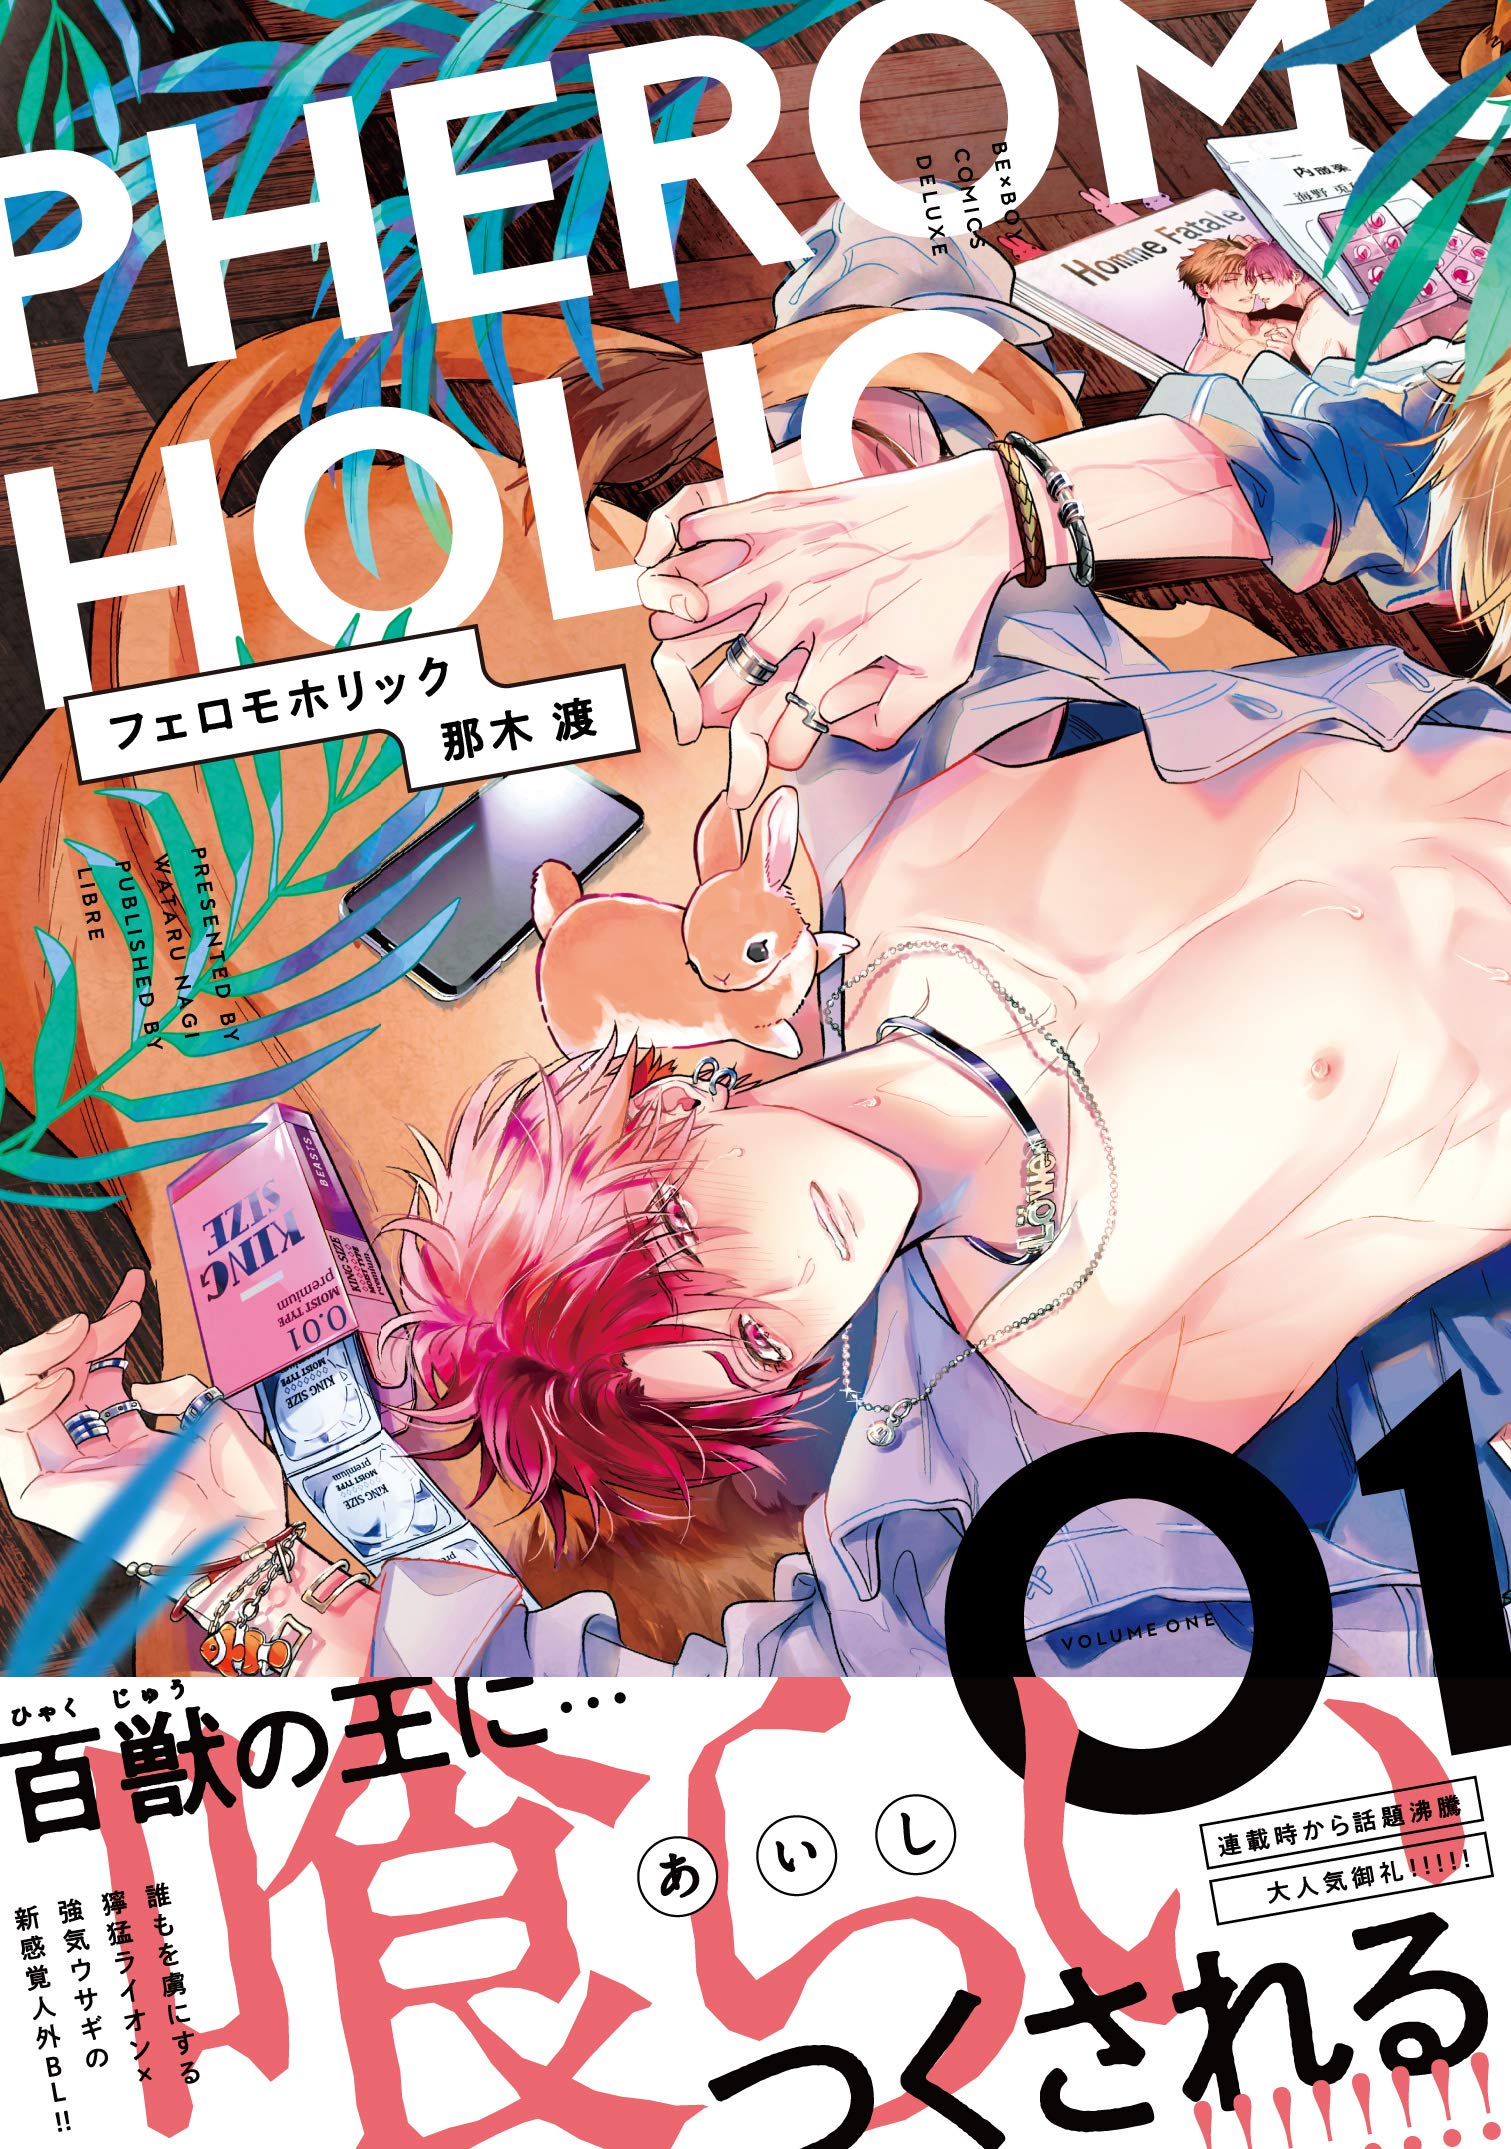 Boys Love (Yaoi) Comics - Pheromo Holic (フェロモホリック (1) (ビーボーイコミックスデラックス)) / Nagi Wataru